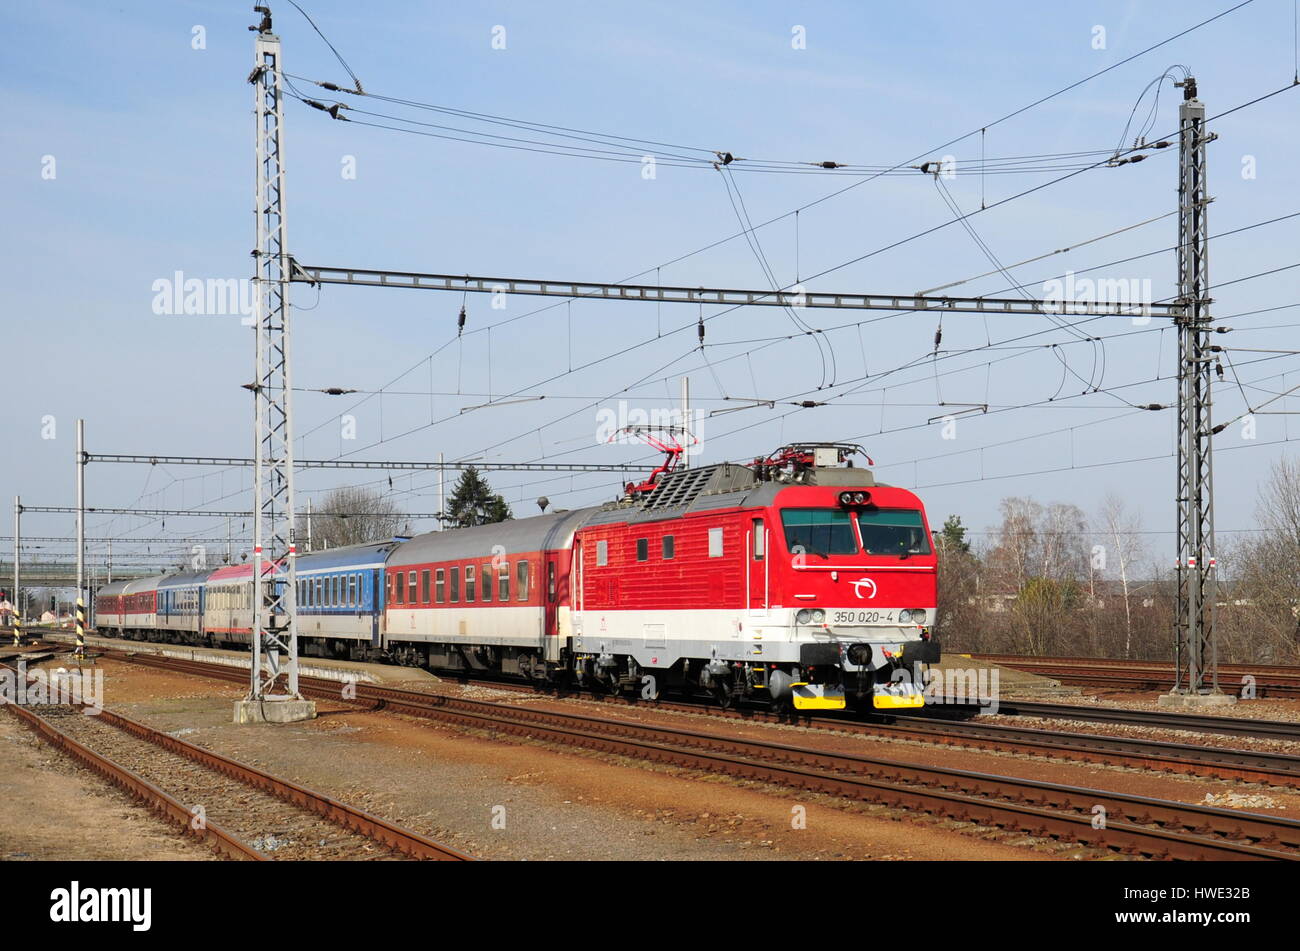 Railway passenger traffic, train, transport, locomotive, passenger Stock Photo